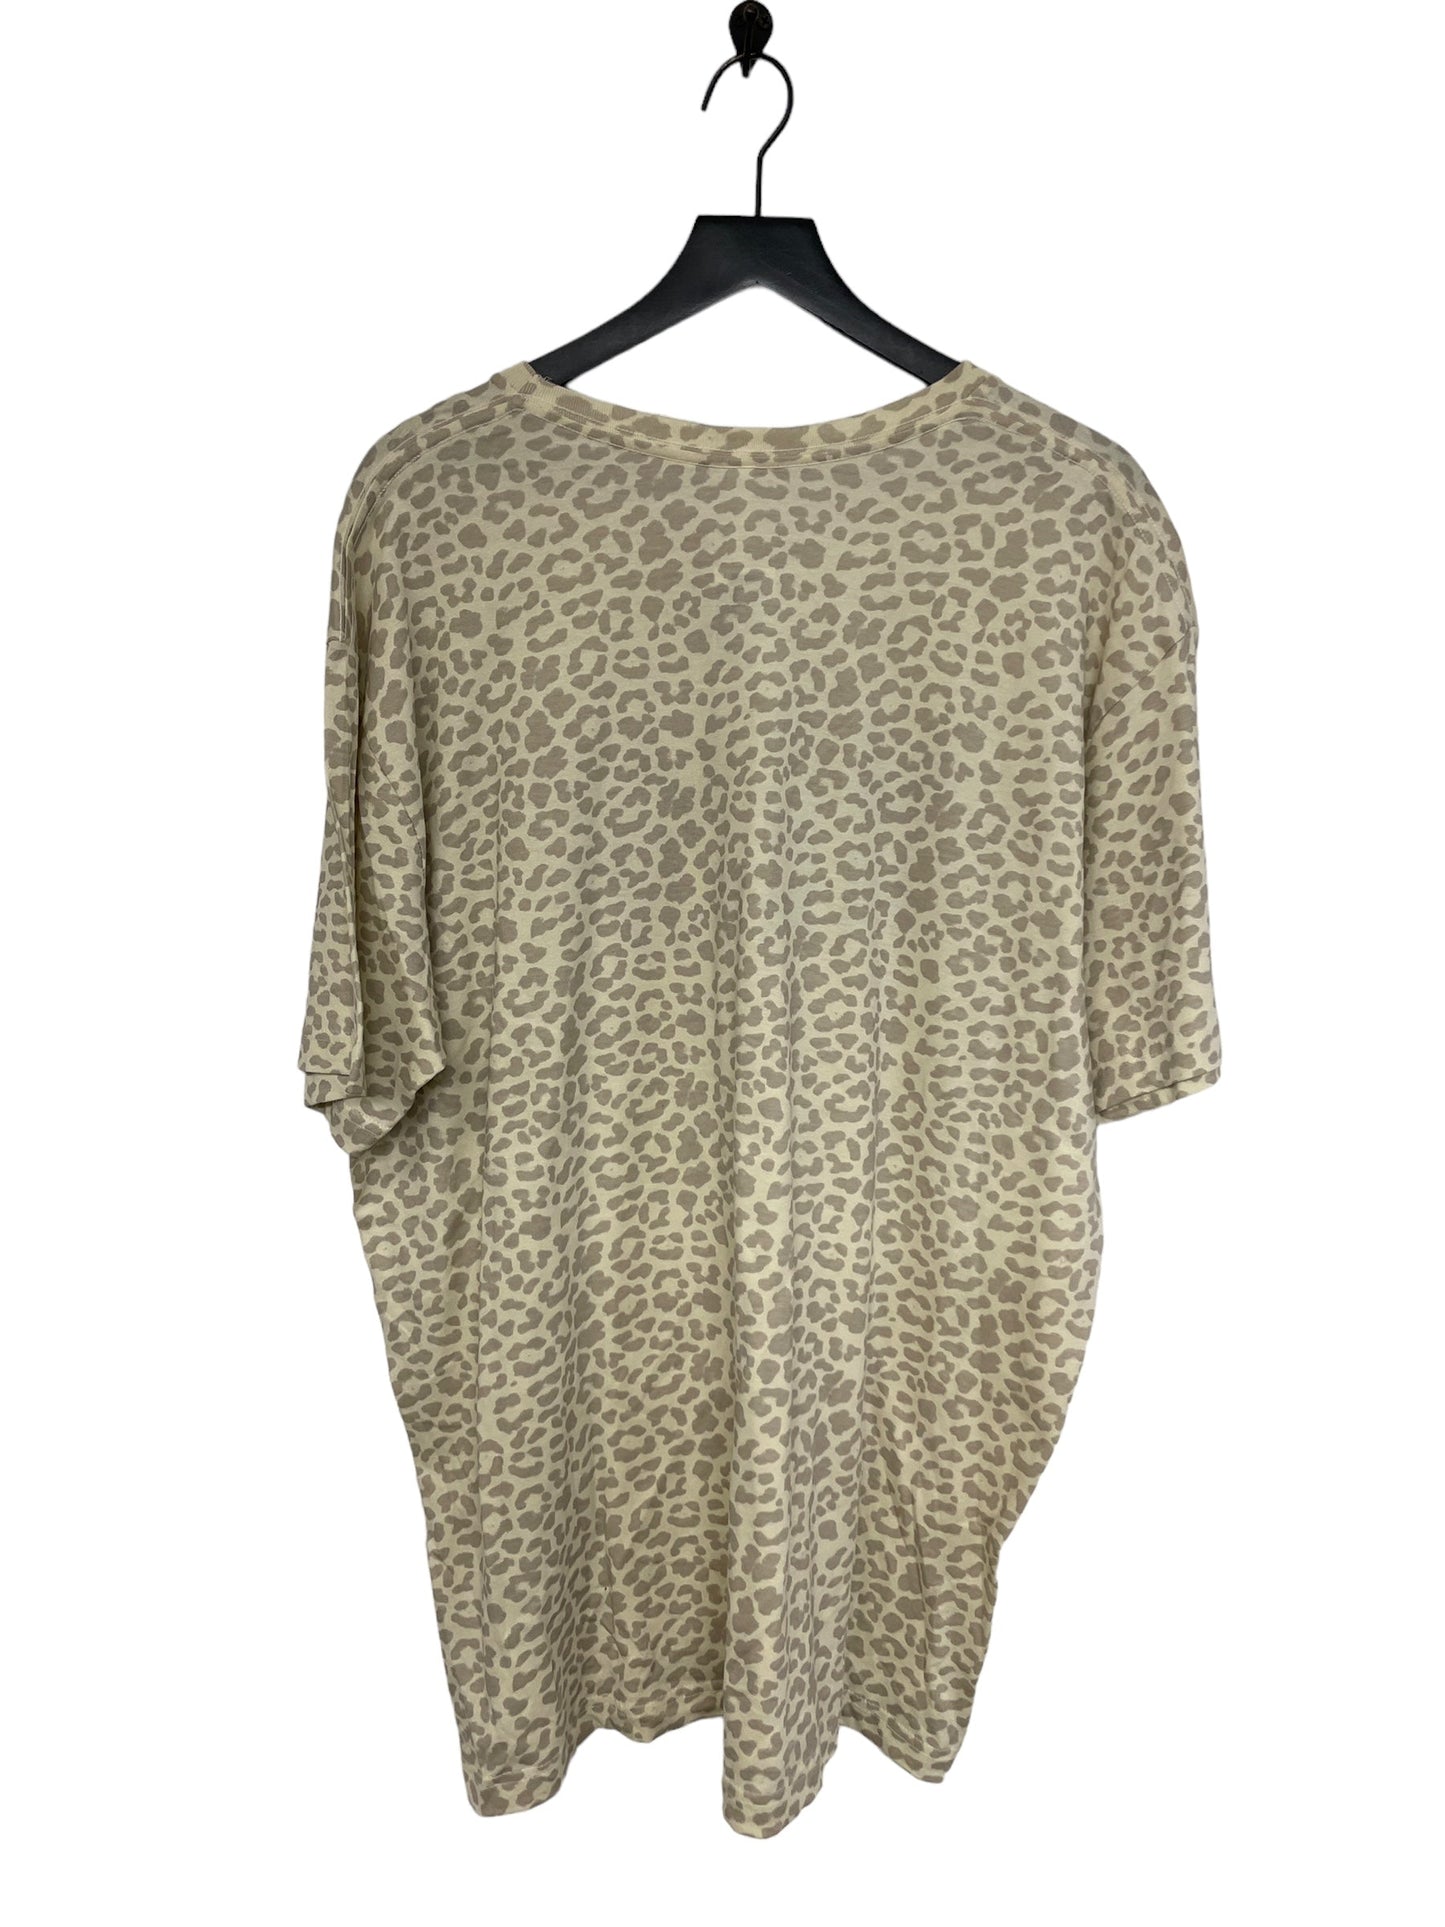 Leopard Print Top Short Sleeve Basic Clothes Mentor, Size 2x